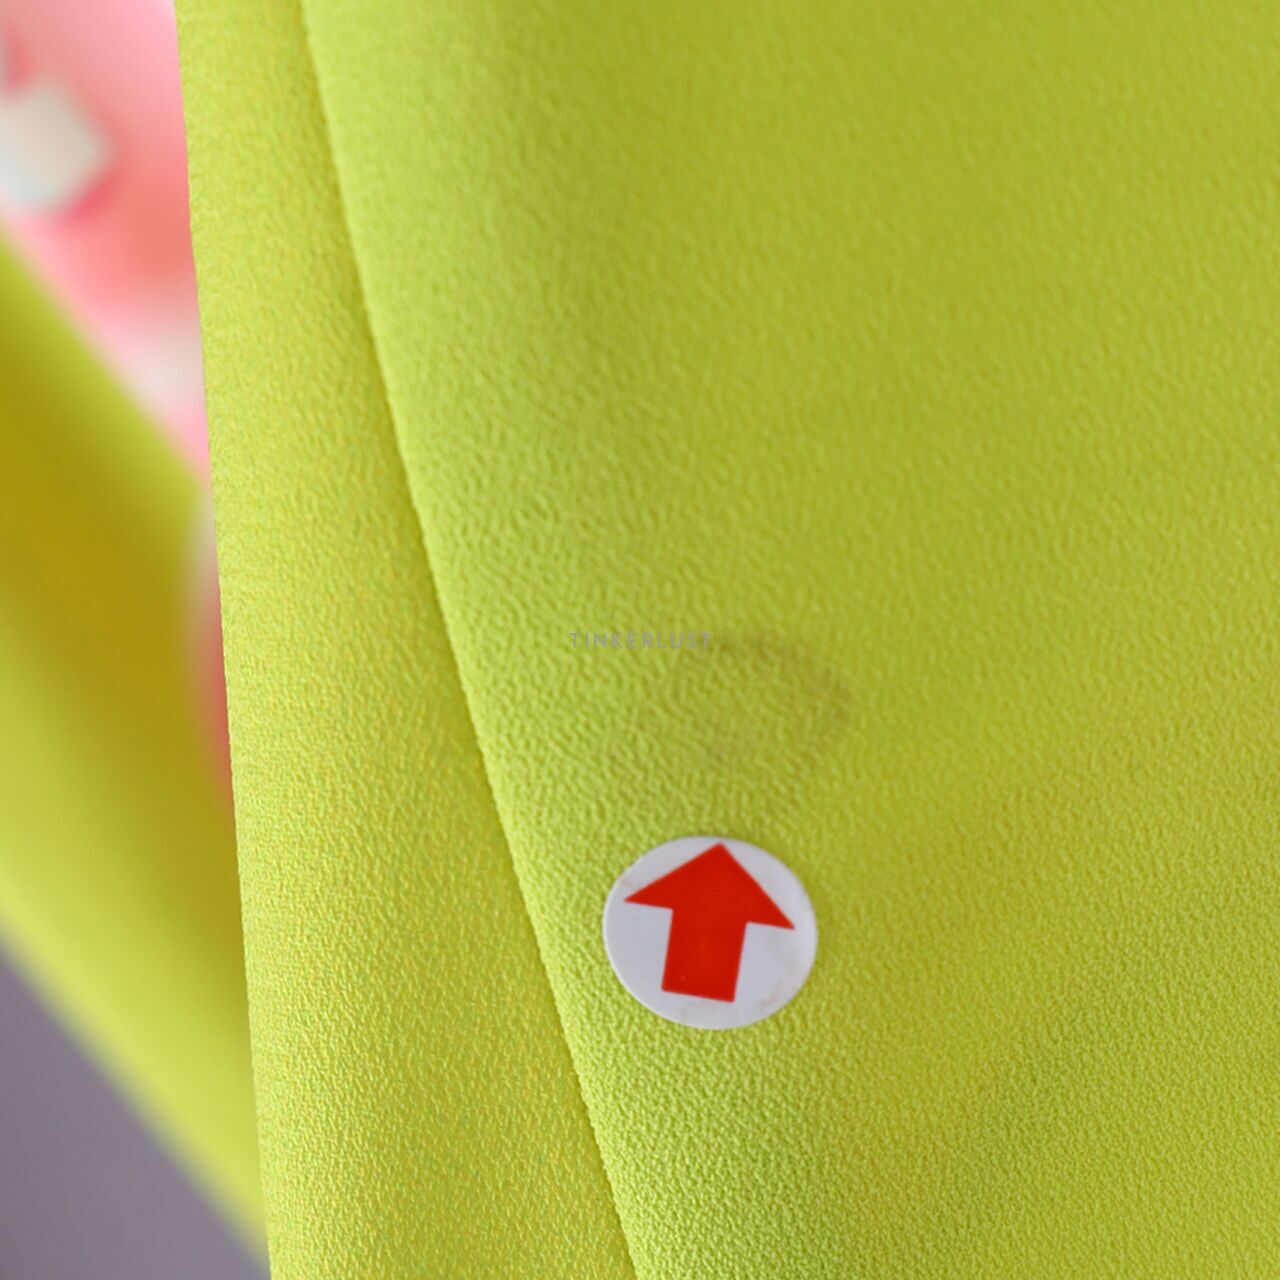 Boutique Moschino Print Neon Yellow Sleeveless